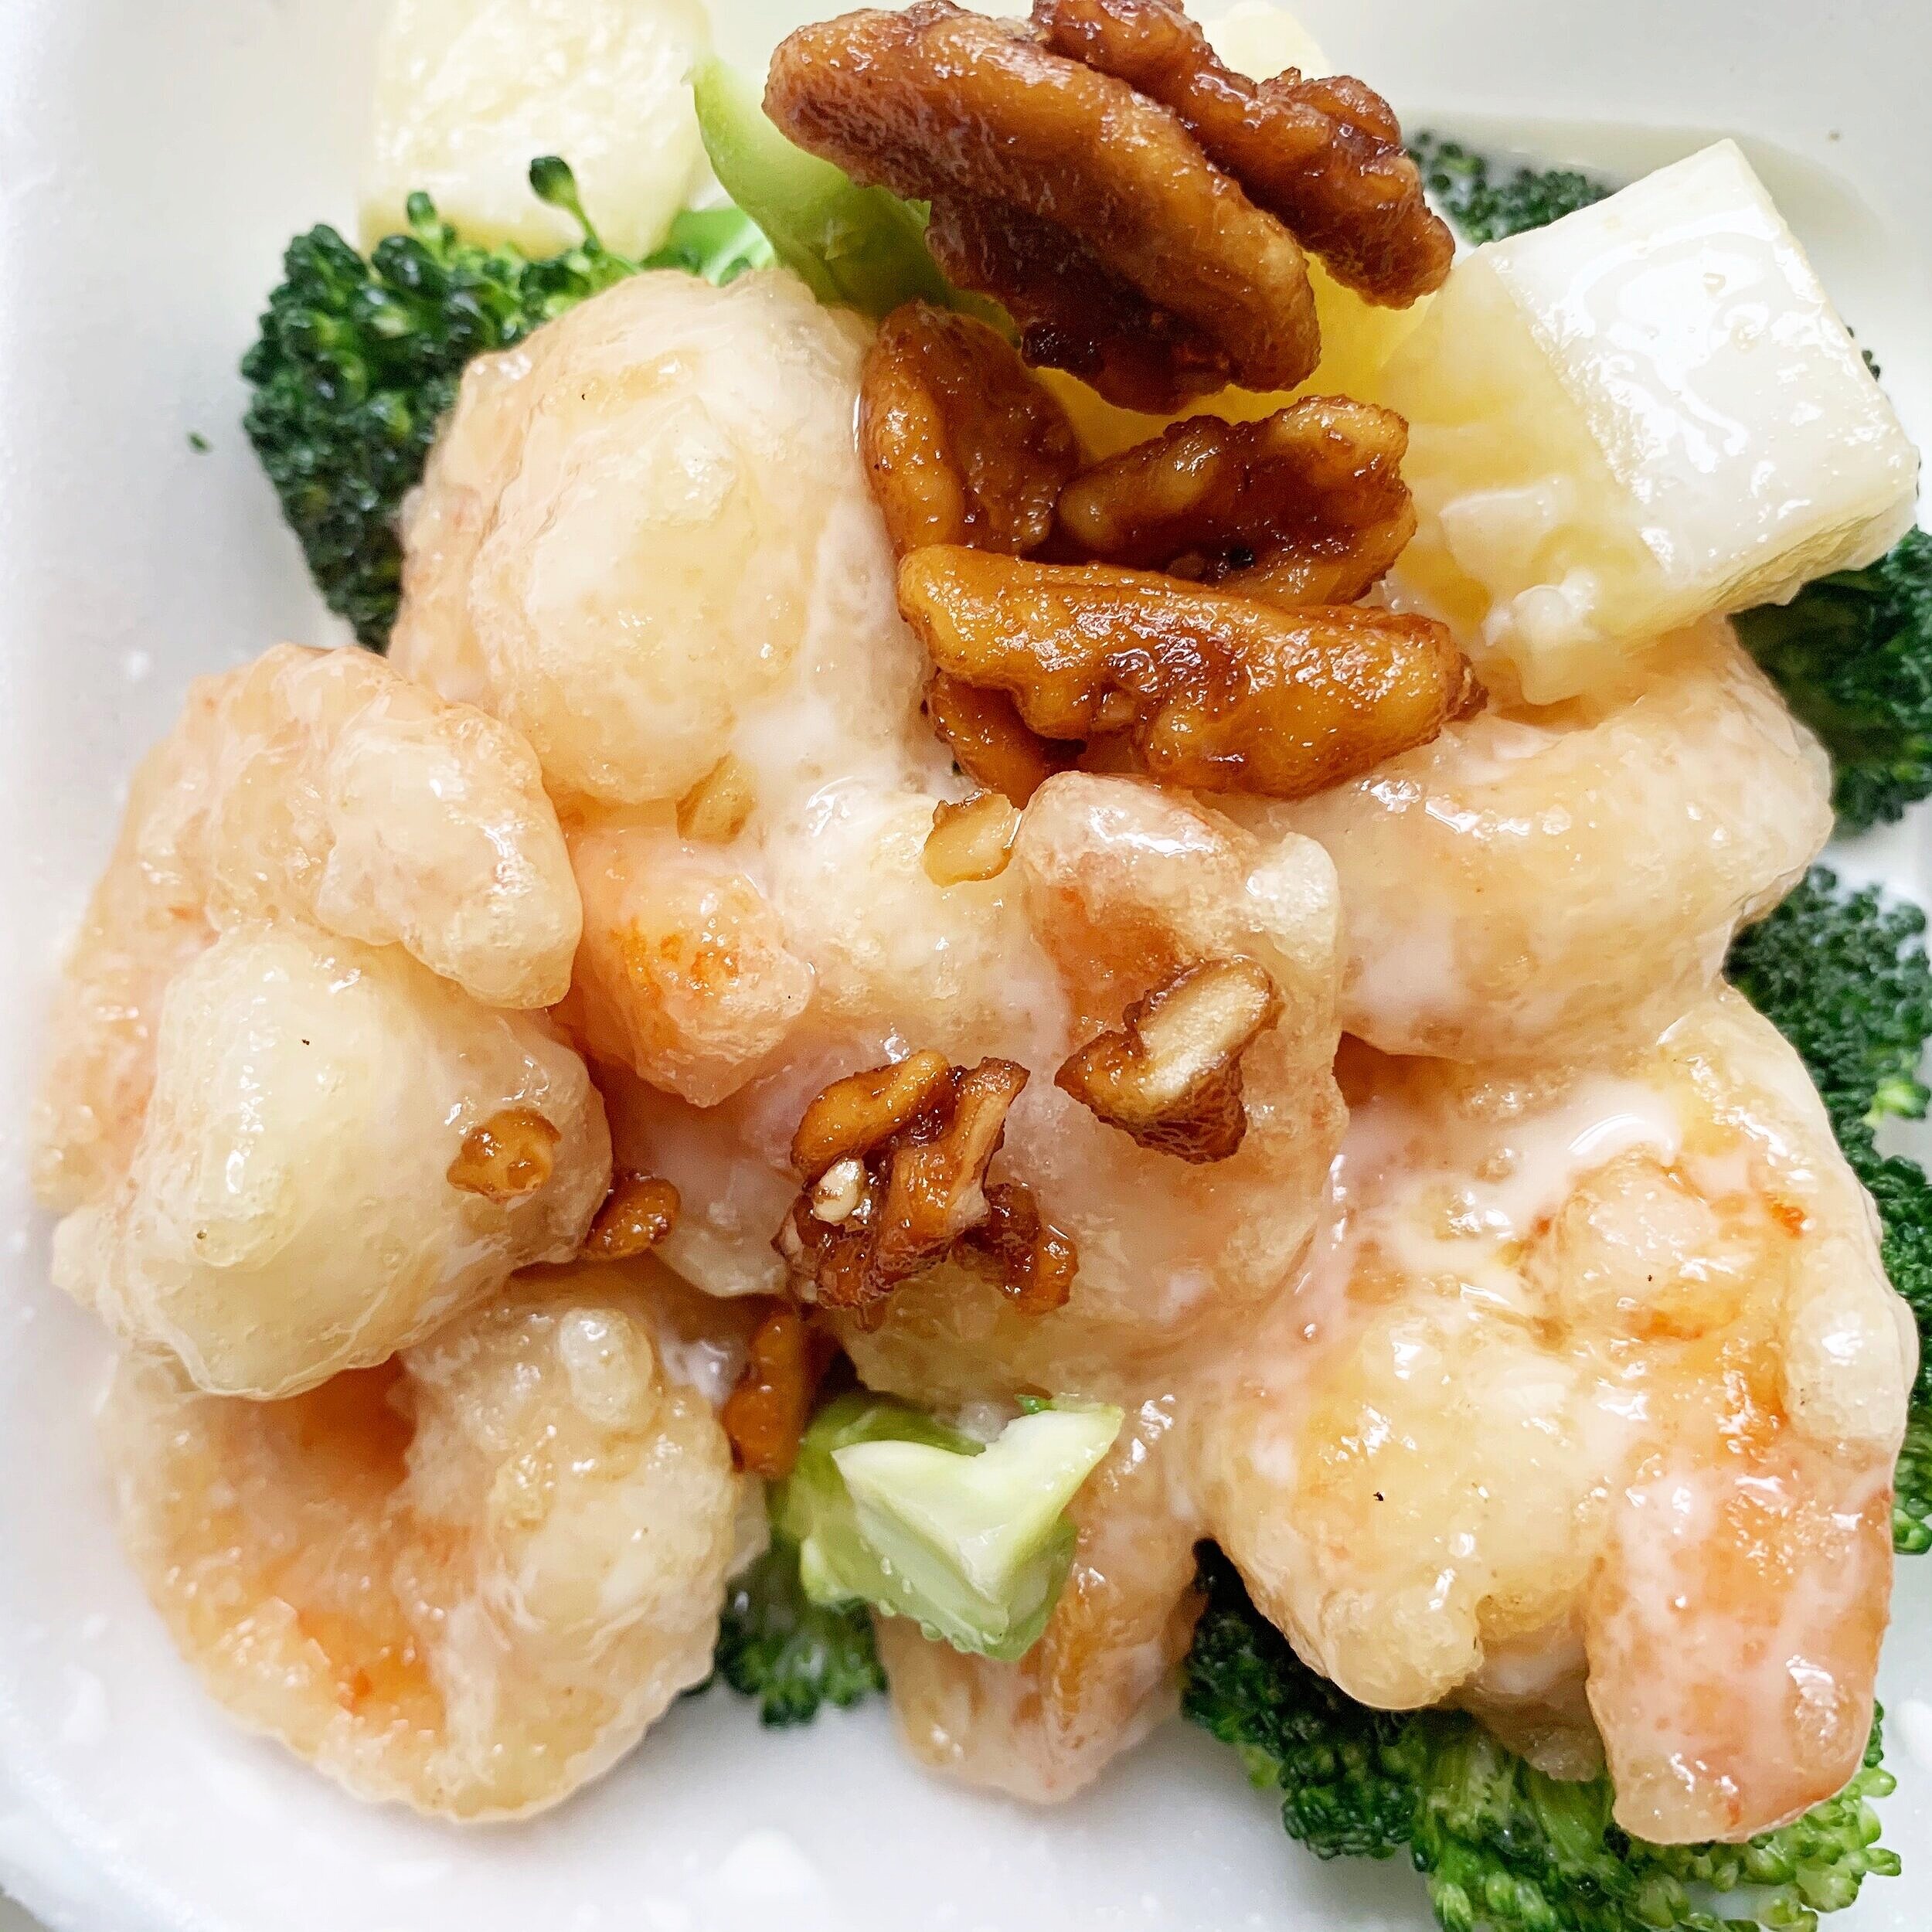 JOYFUL GARDEN, Watertown: Shrimp with Honey Walnut